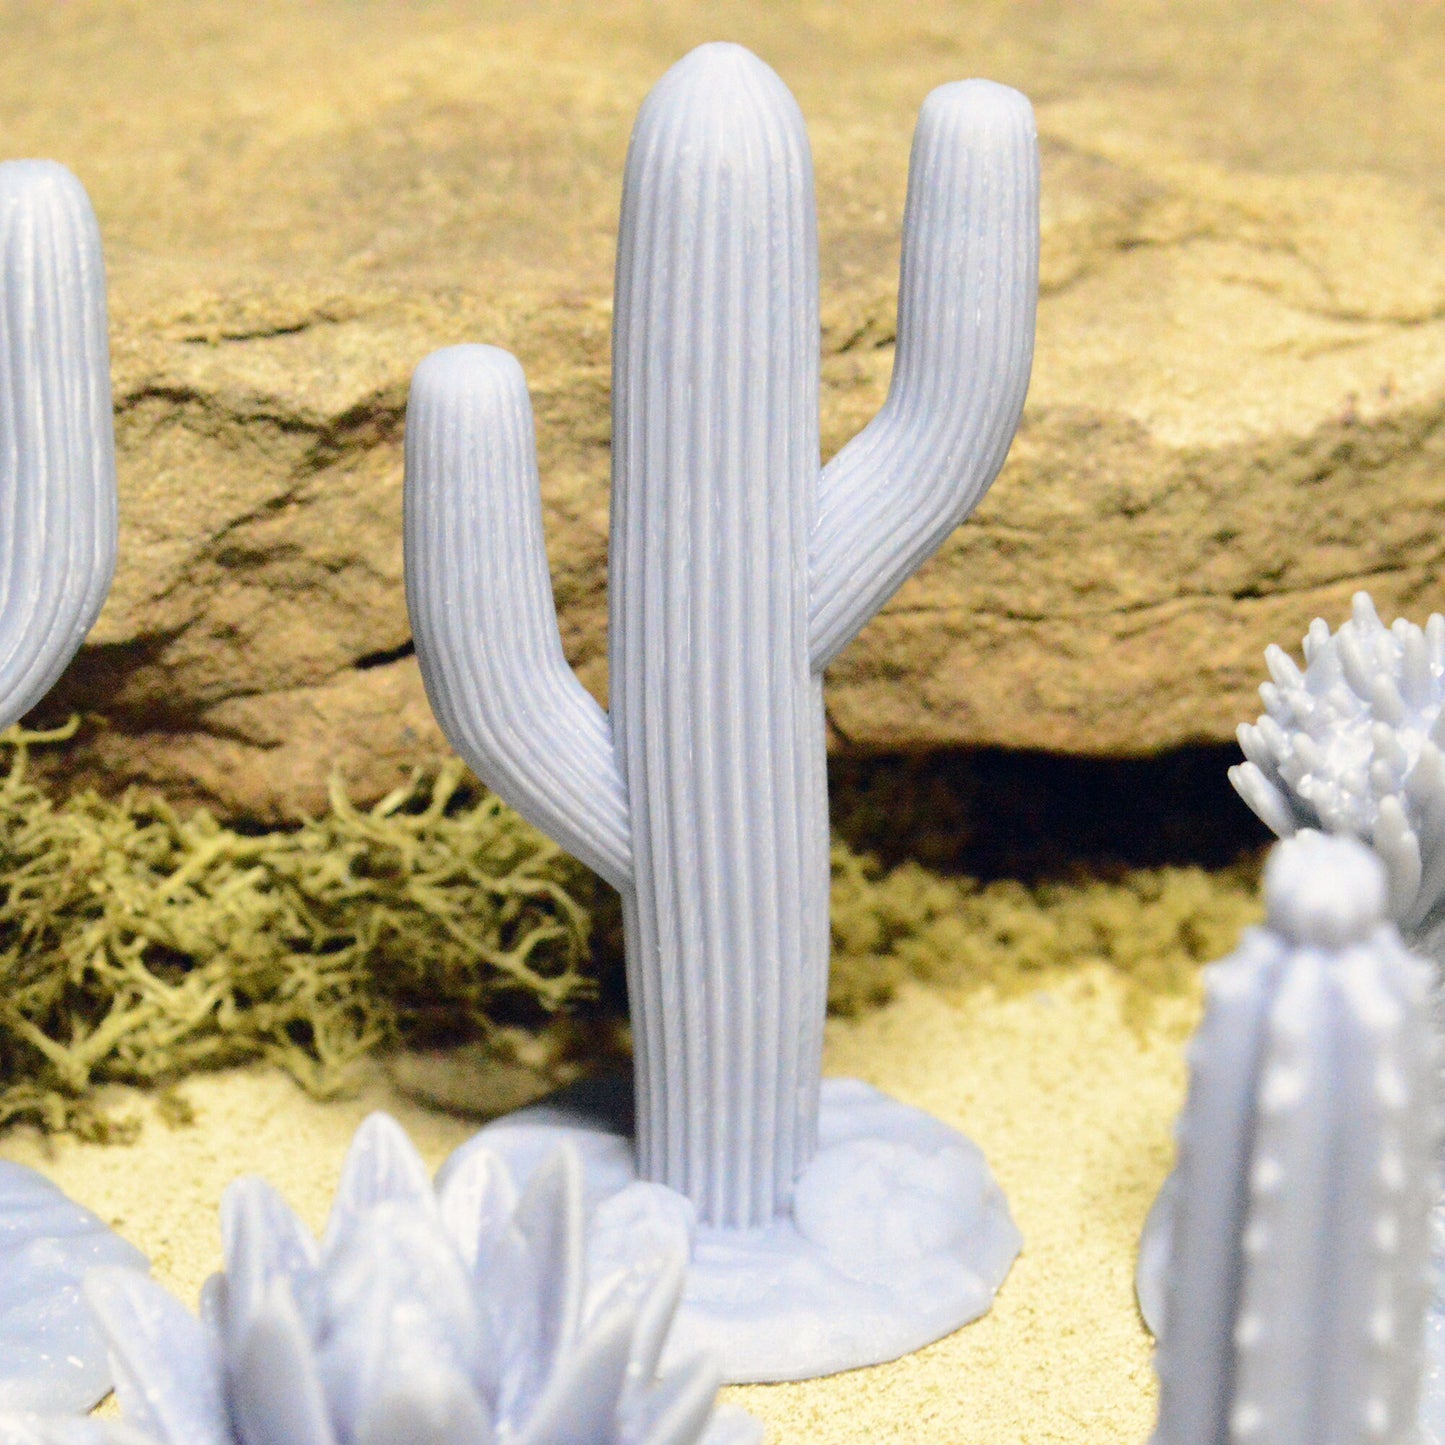 Miniature Desert Plants 28mm 32mm for D&D Terrain, DnD Pathfinder, Star Wars Legion Terrain, Yucca Trees, Cacti, Cactus